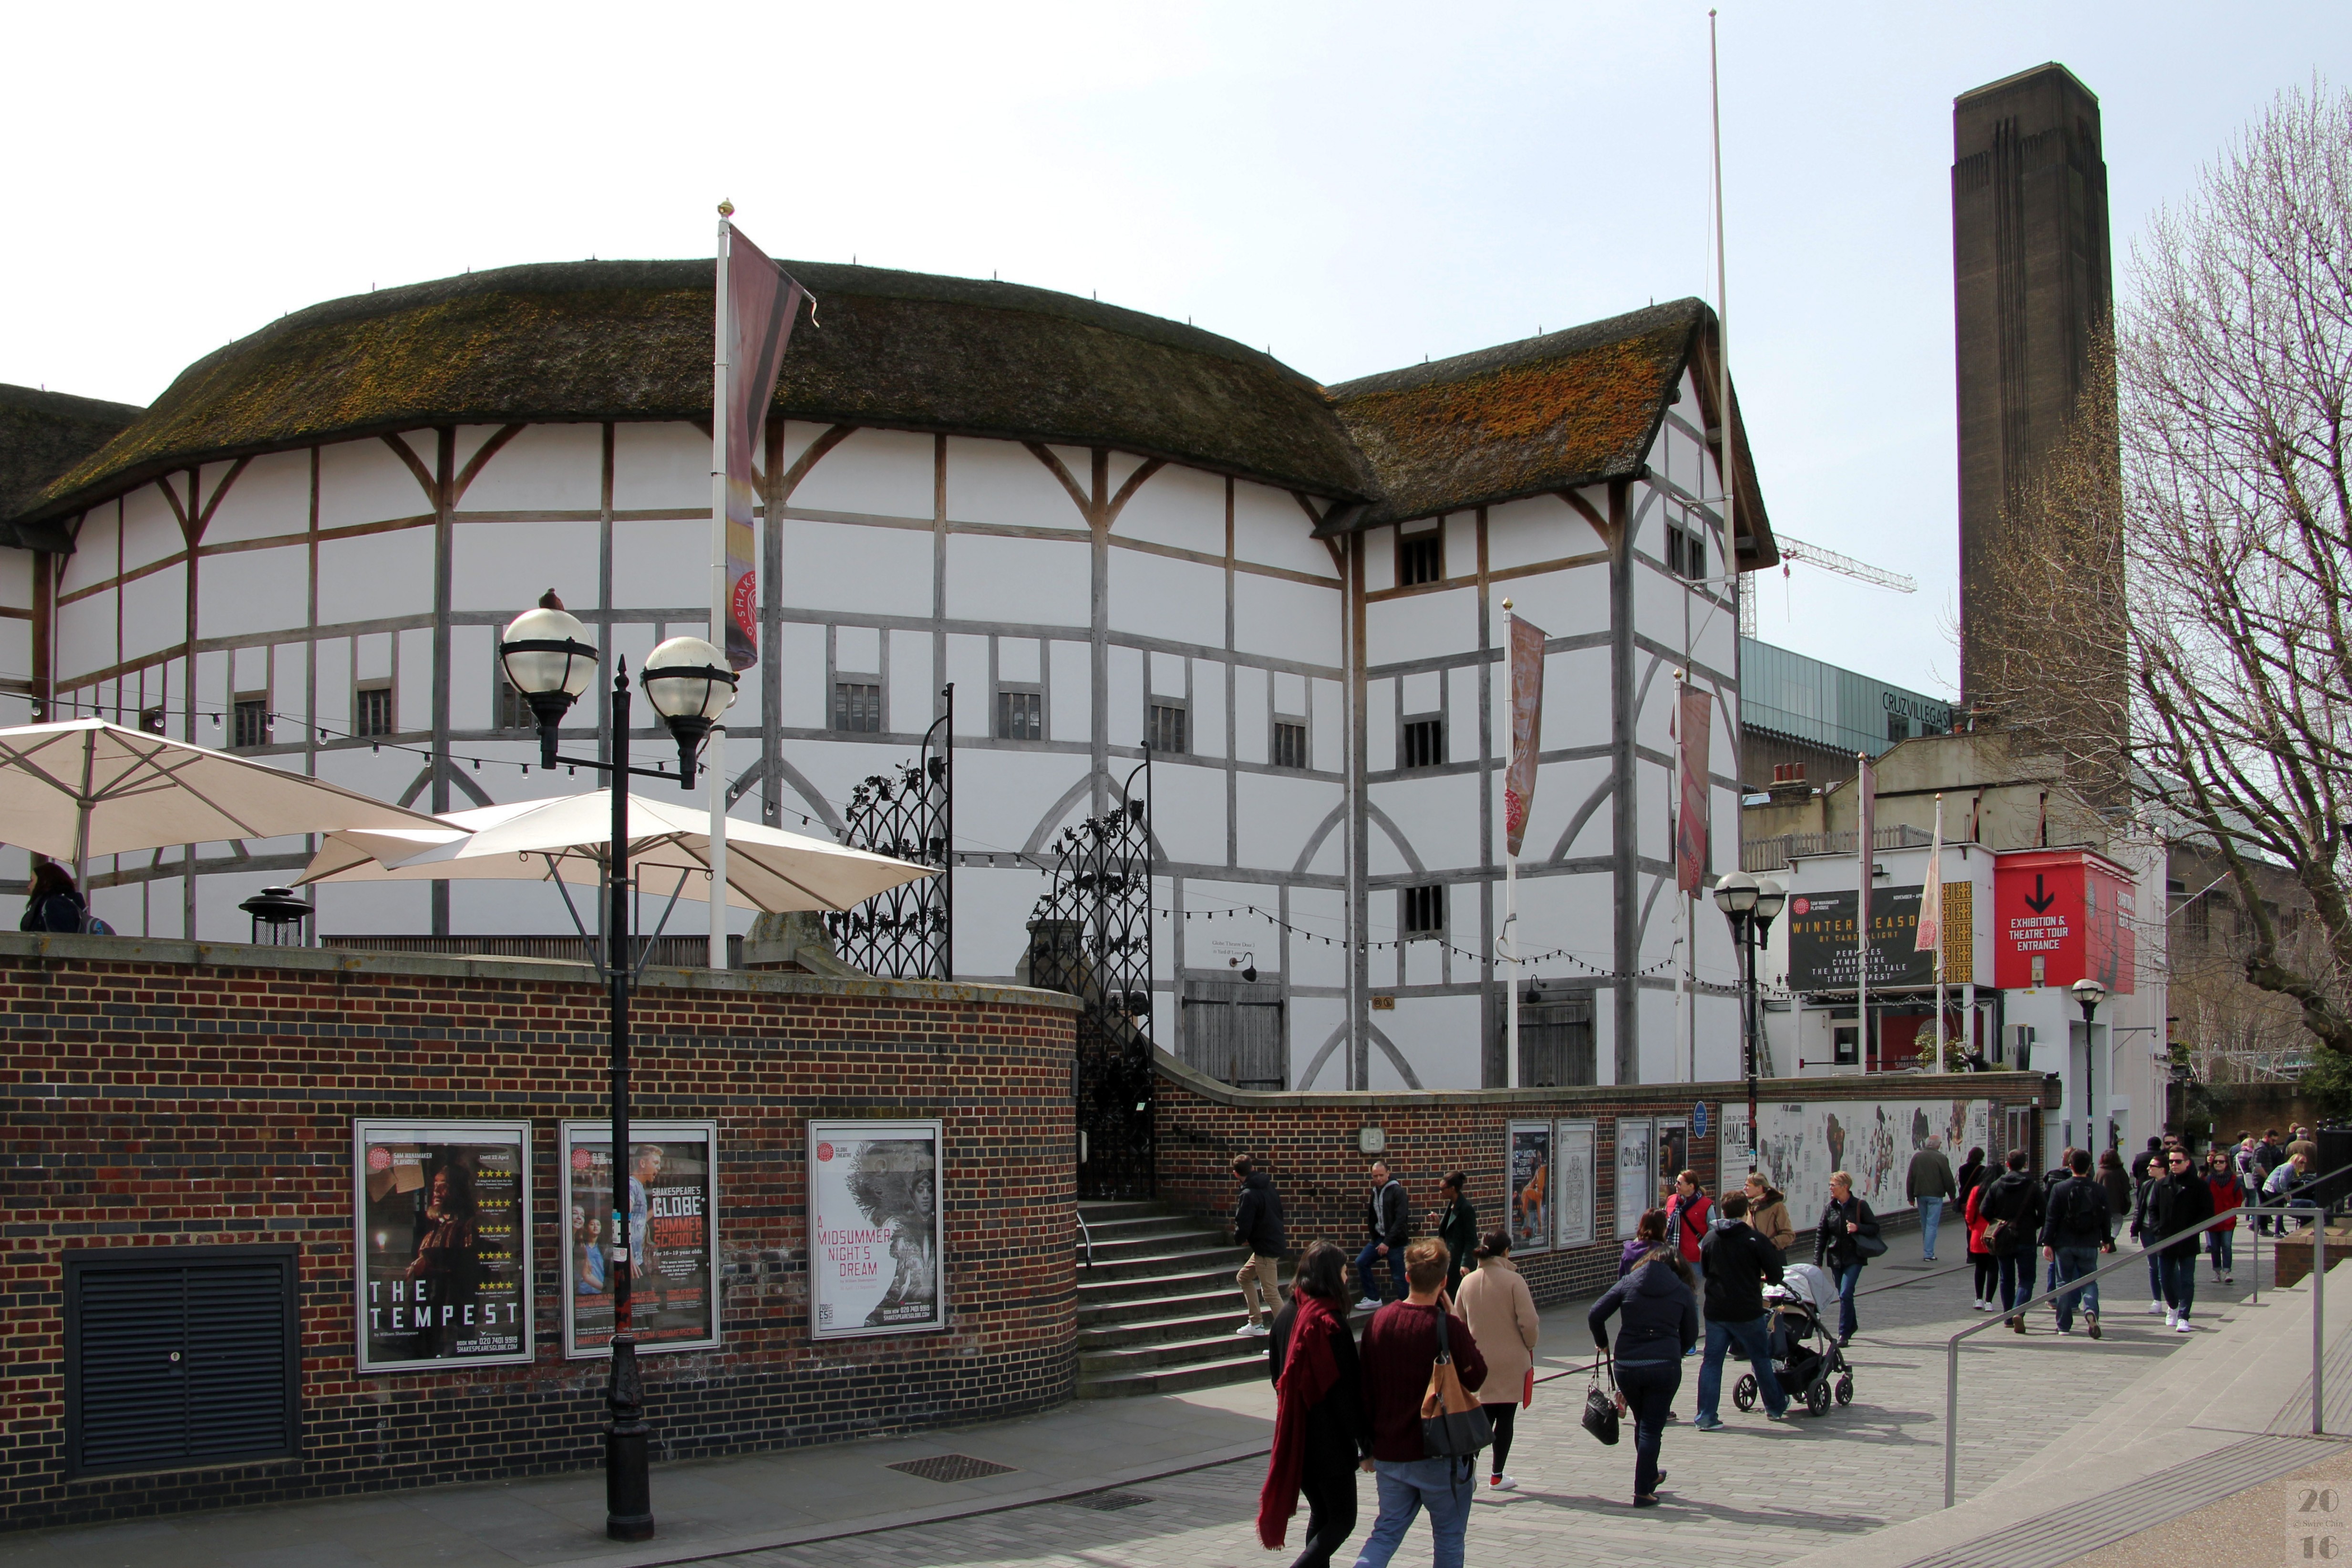 Shakespeare s theatre. Шекспировский «Глобус» (Shakespeare's Globe). Театр «Глобус», Лондон, Великобритания. Шекспировский театр в Лондоне. Театр Глобус Шекспира.